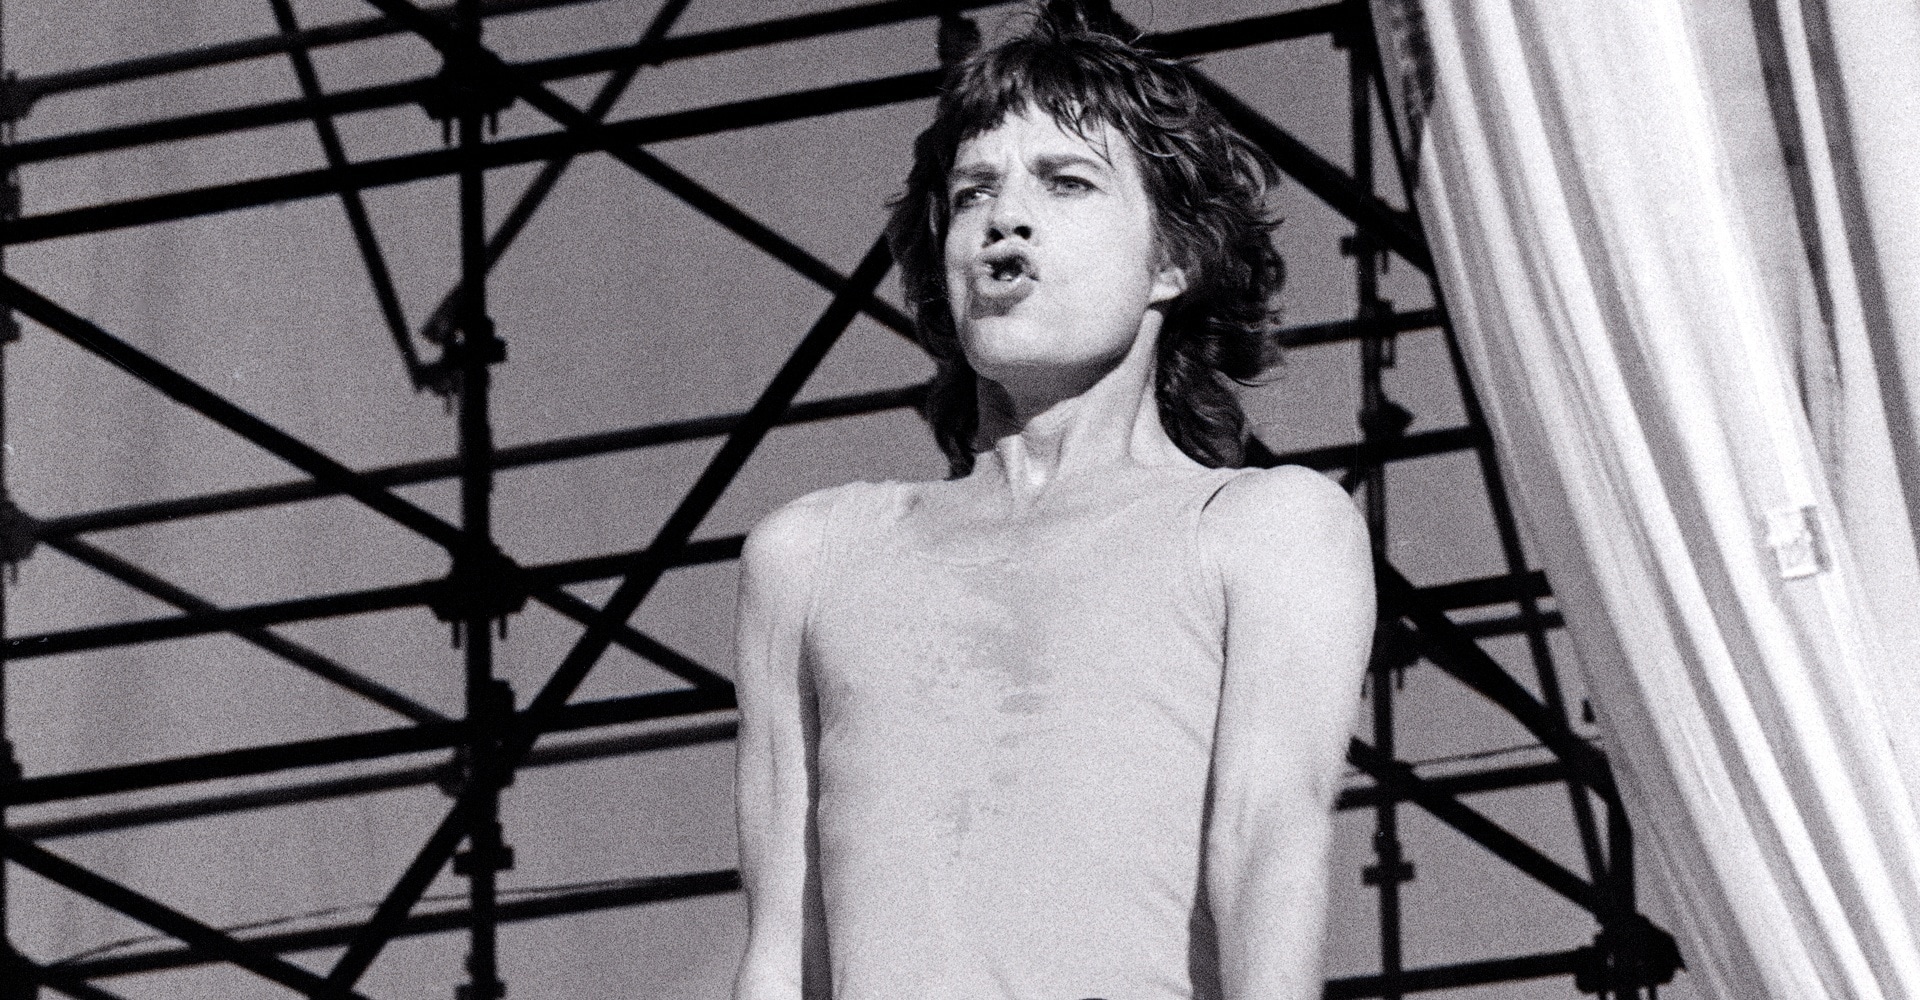 Mick Jagger - Philadelphia, 1981